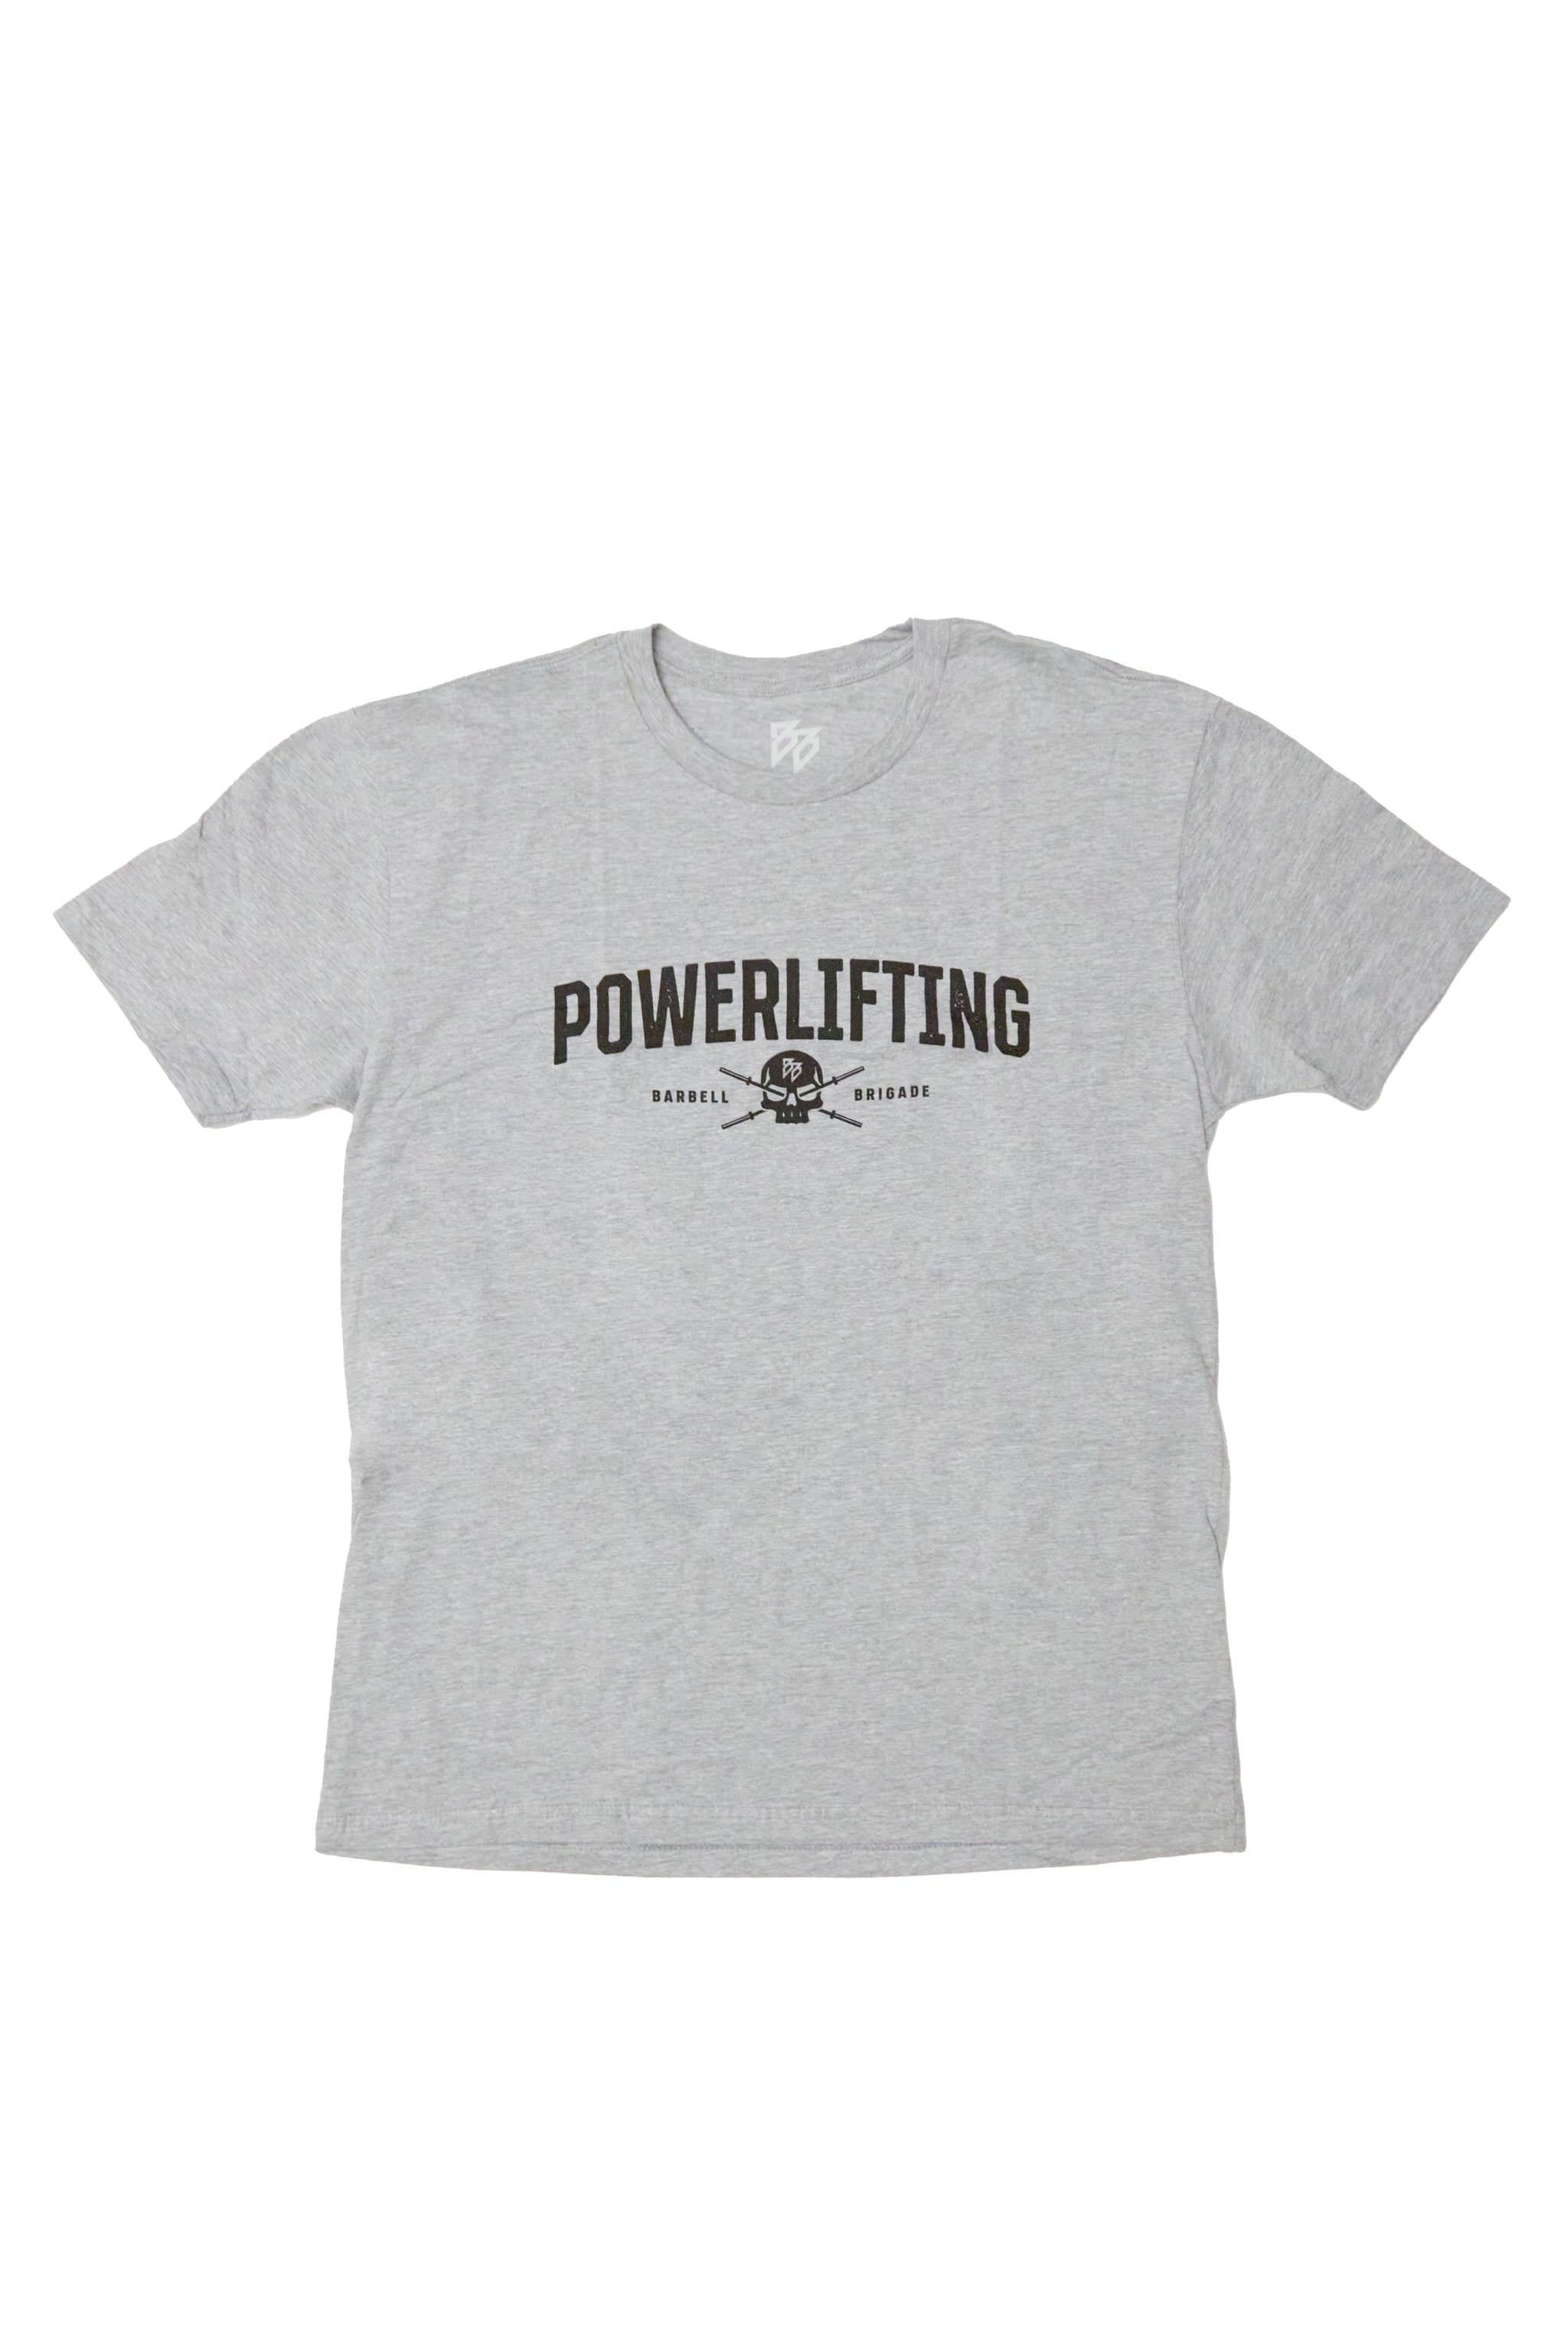 Powerlifting - Tee (Heather Grey)